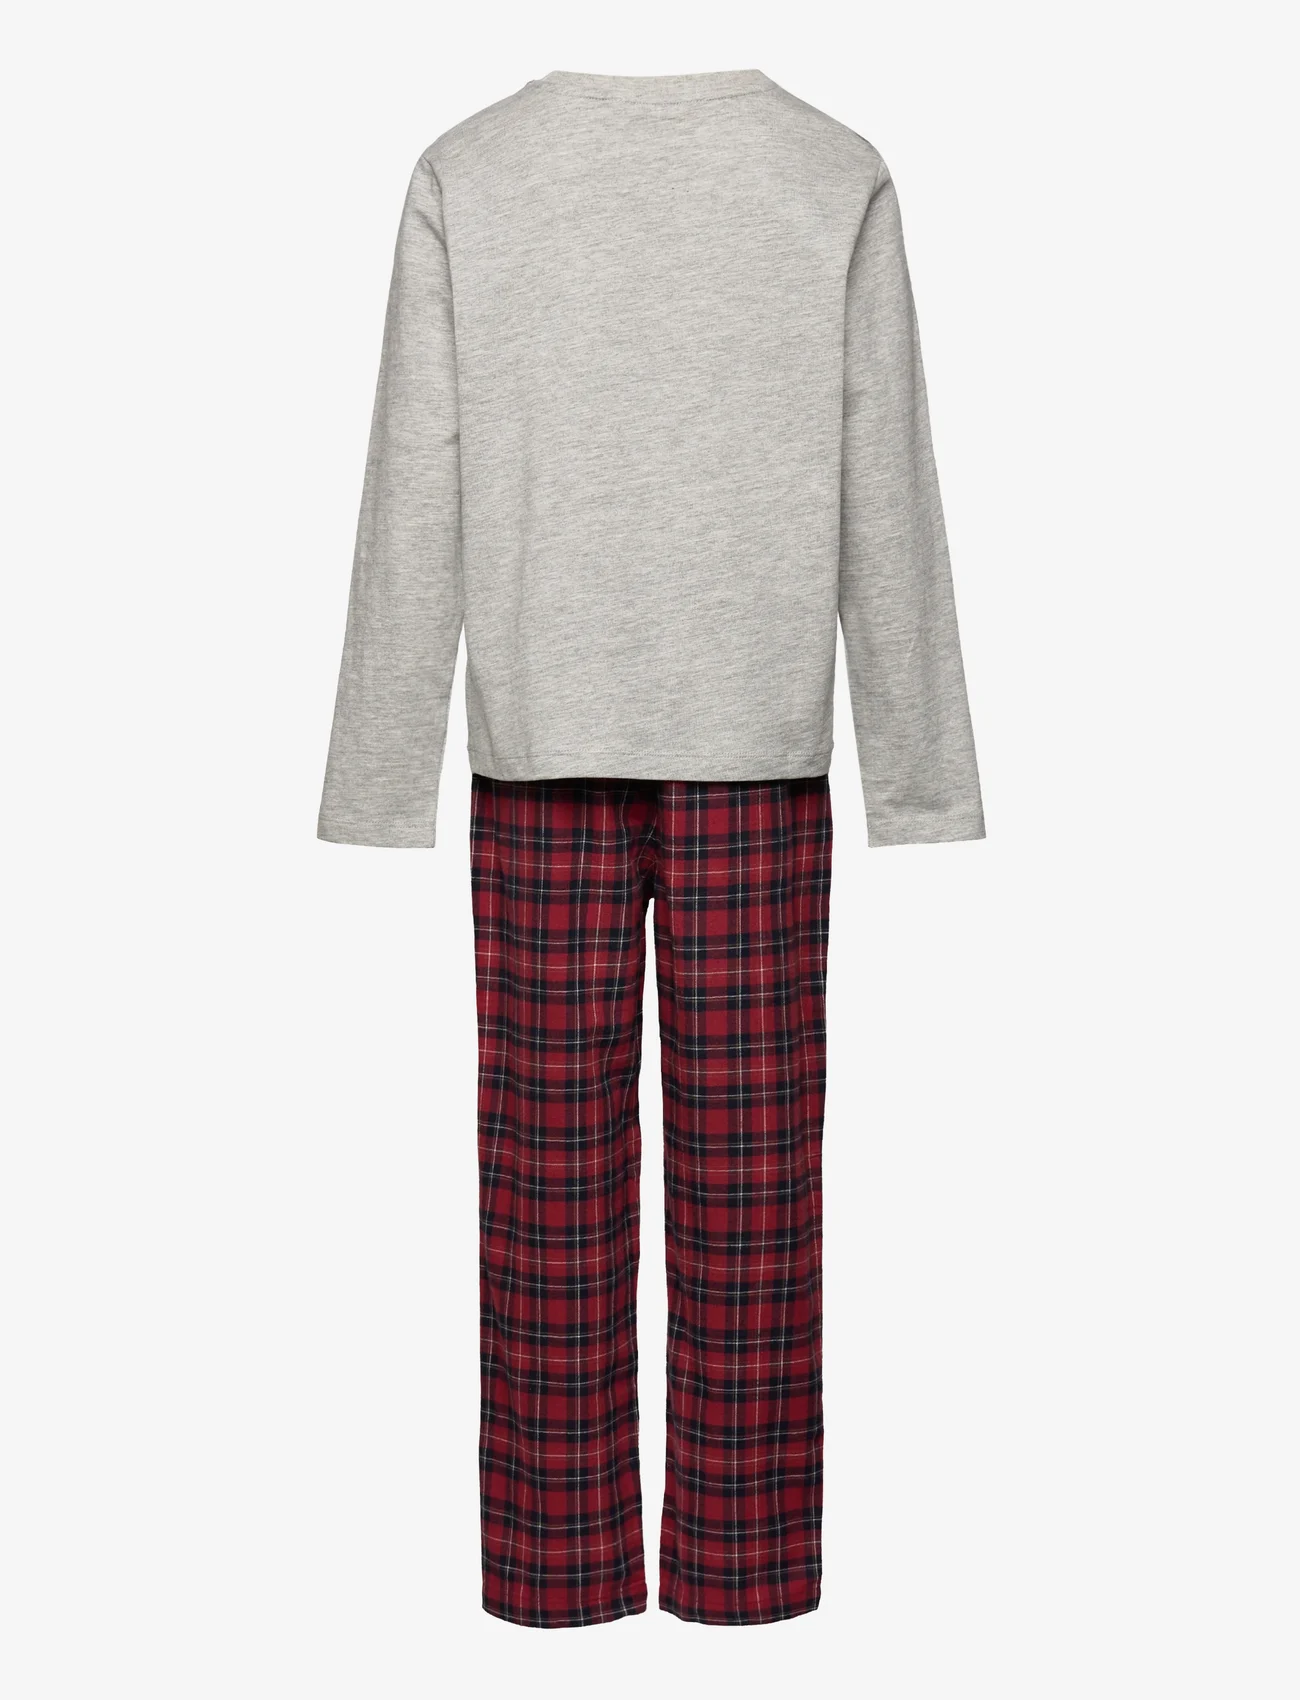 Mango - Two-pieces check long pyjamas - pyjamasset - red - 1